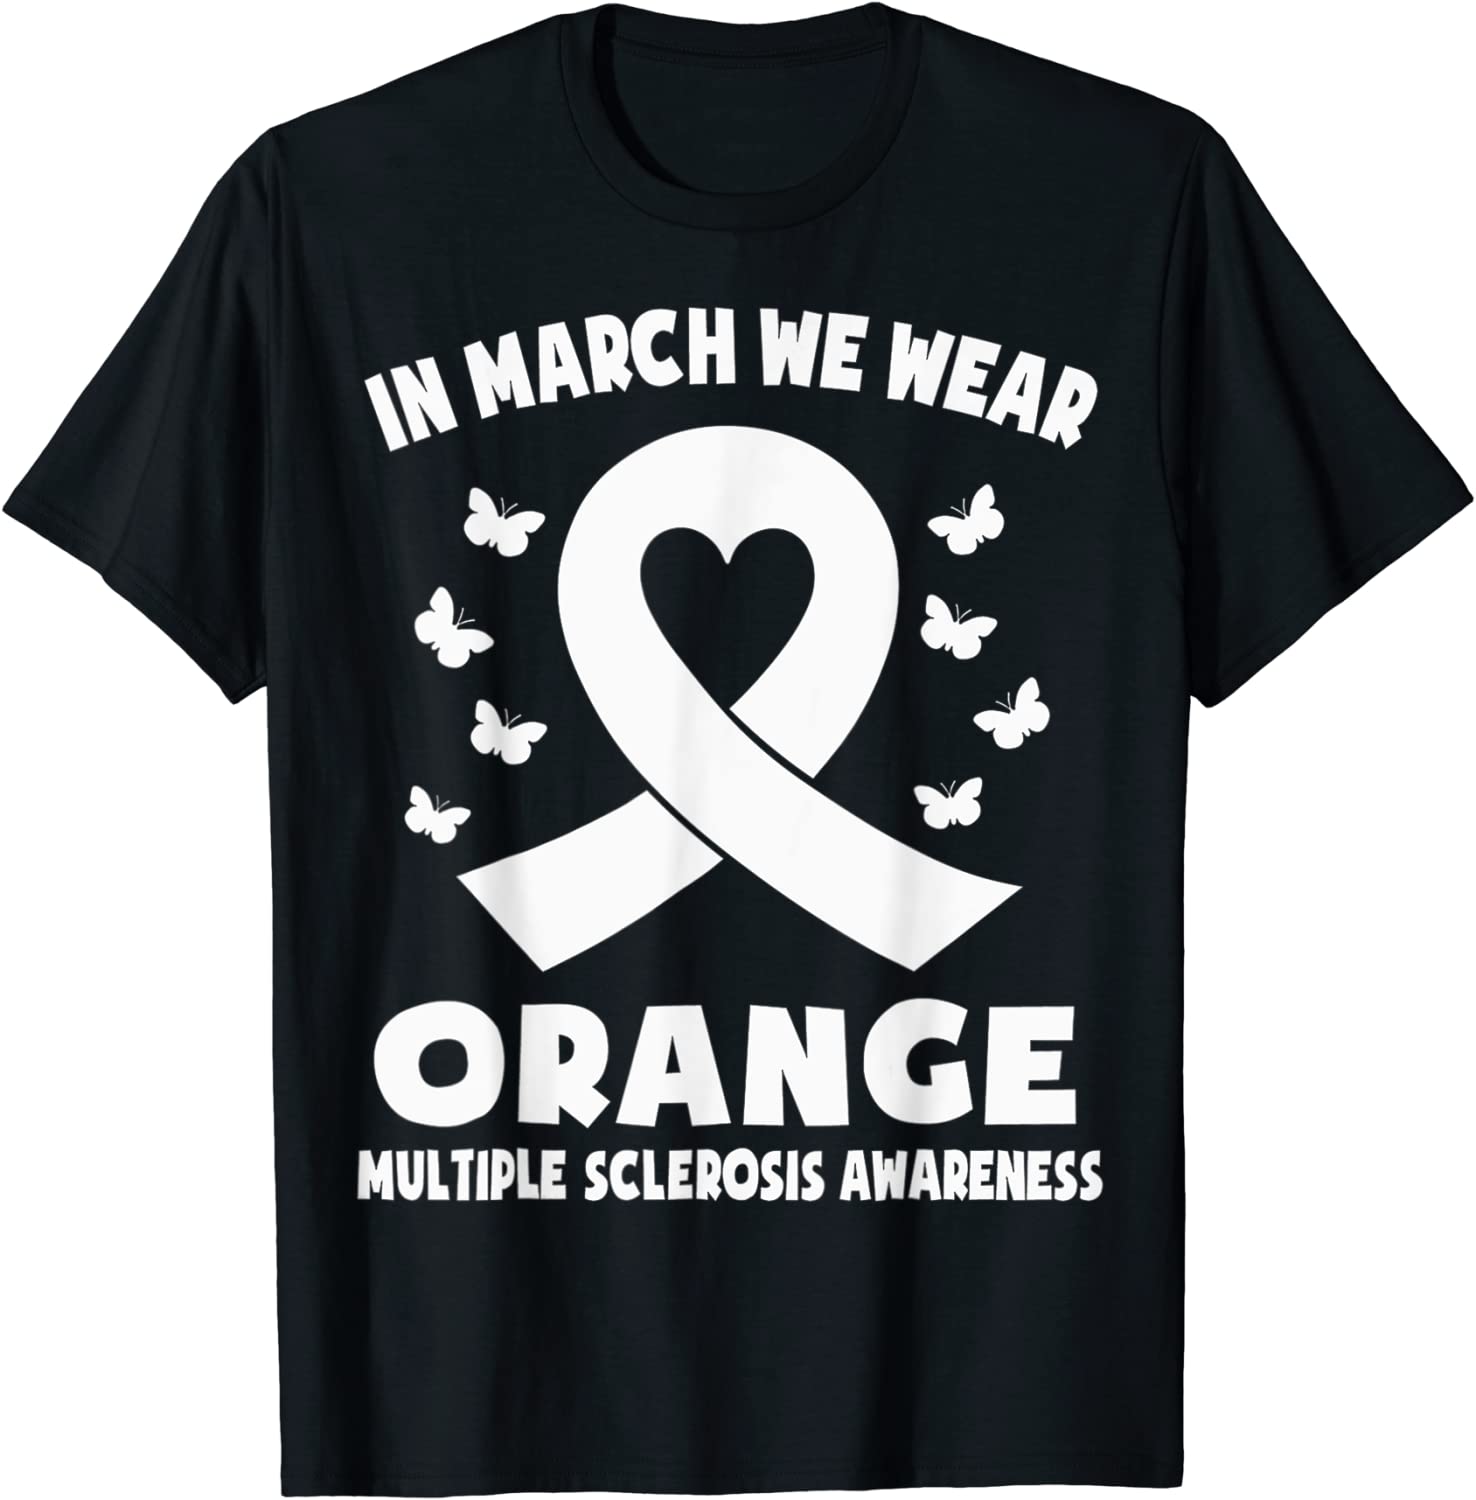 In March We Wear Orange MS awareness Ribbon Heart Tee Shirt ...